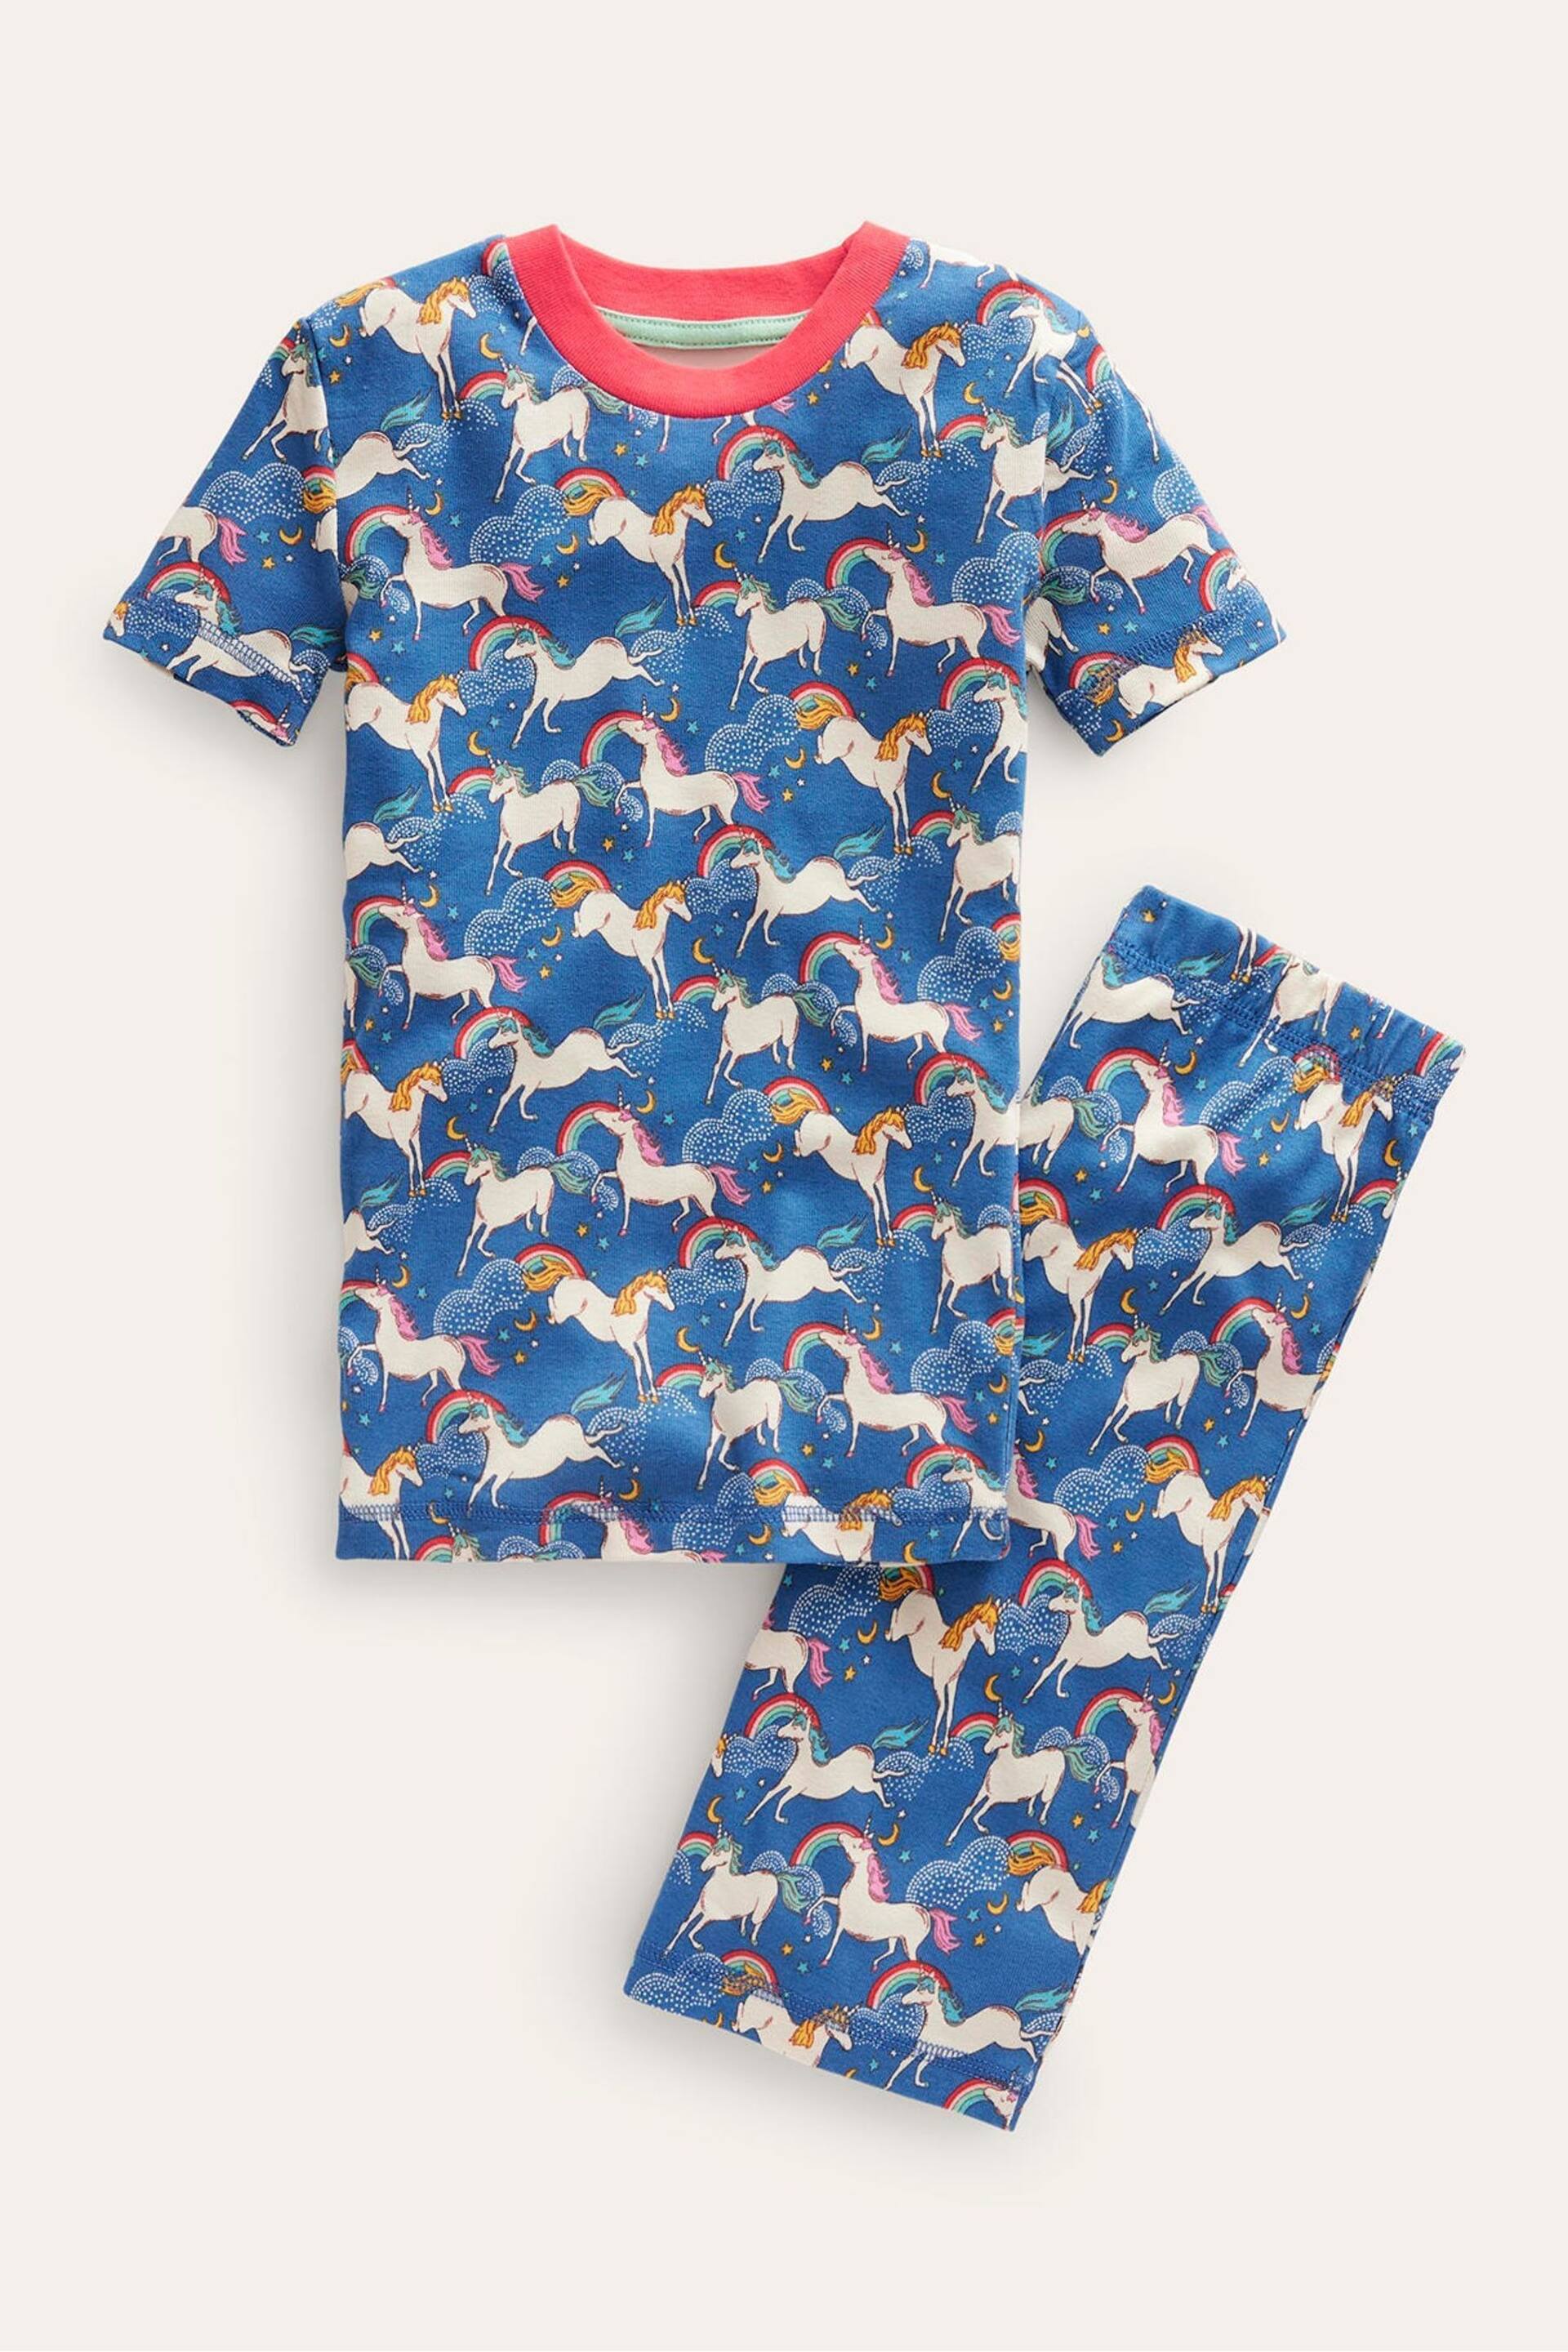 Boden Blue Snug Short John Pyjamas - Image 1 of 2